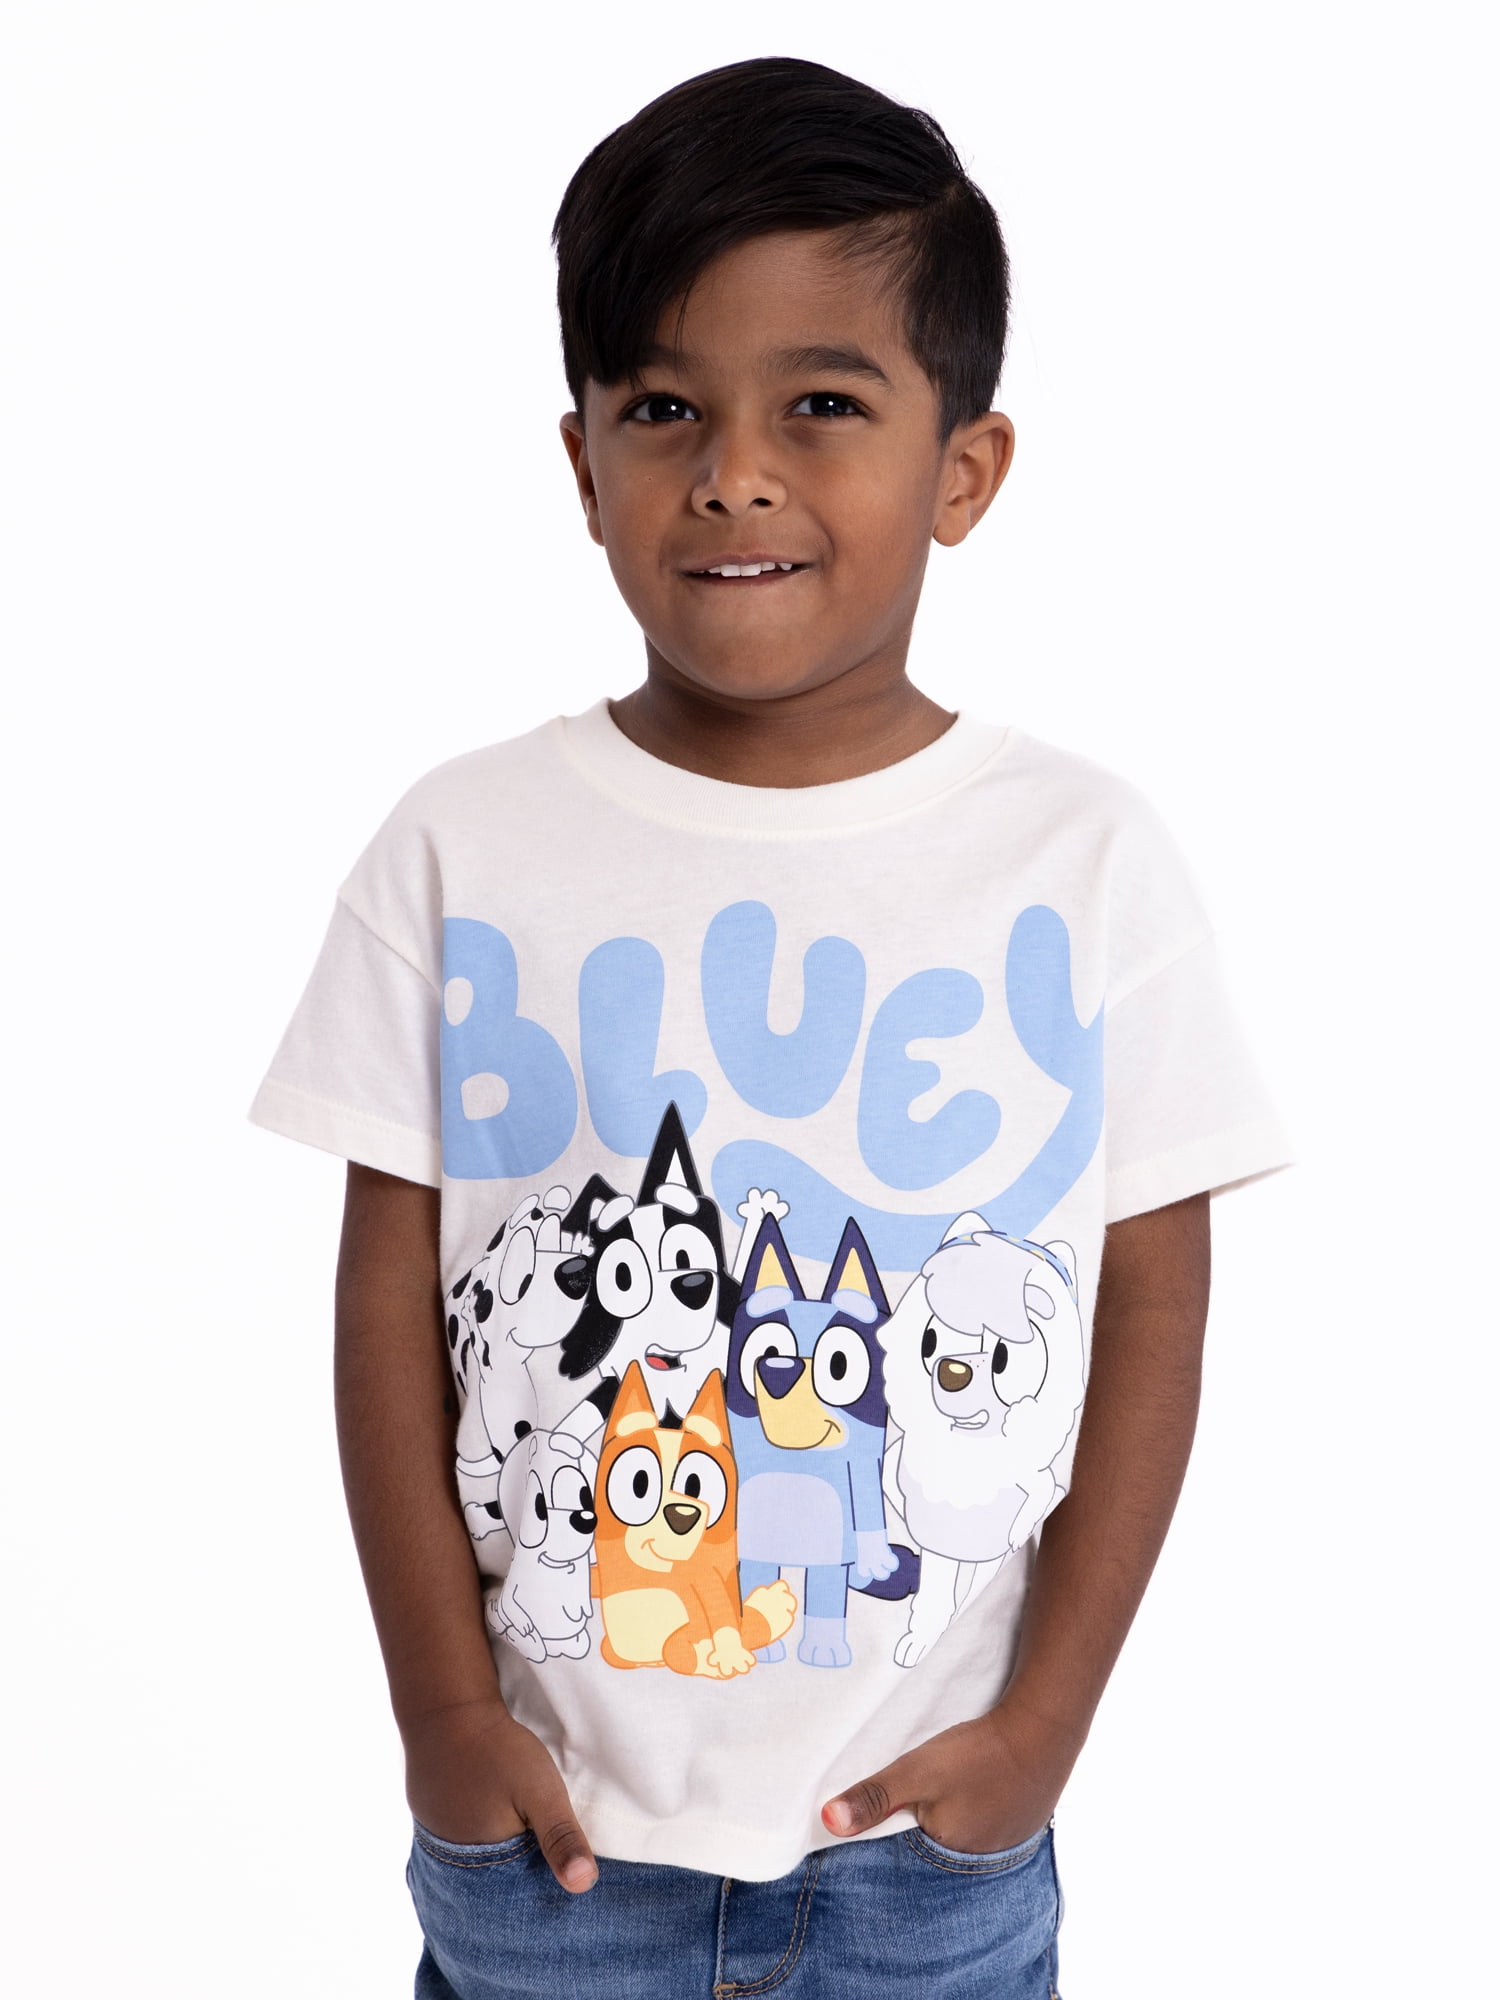 Bluey Toddler Boys or Girls Short Sleeve Crewneck T-Shirt, Sizes 2T-5T 